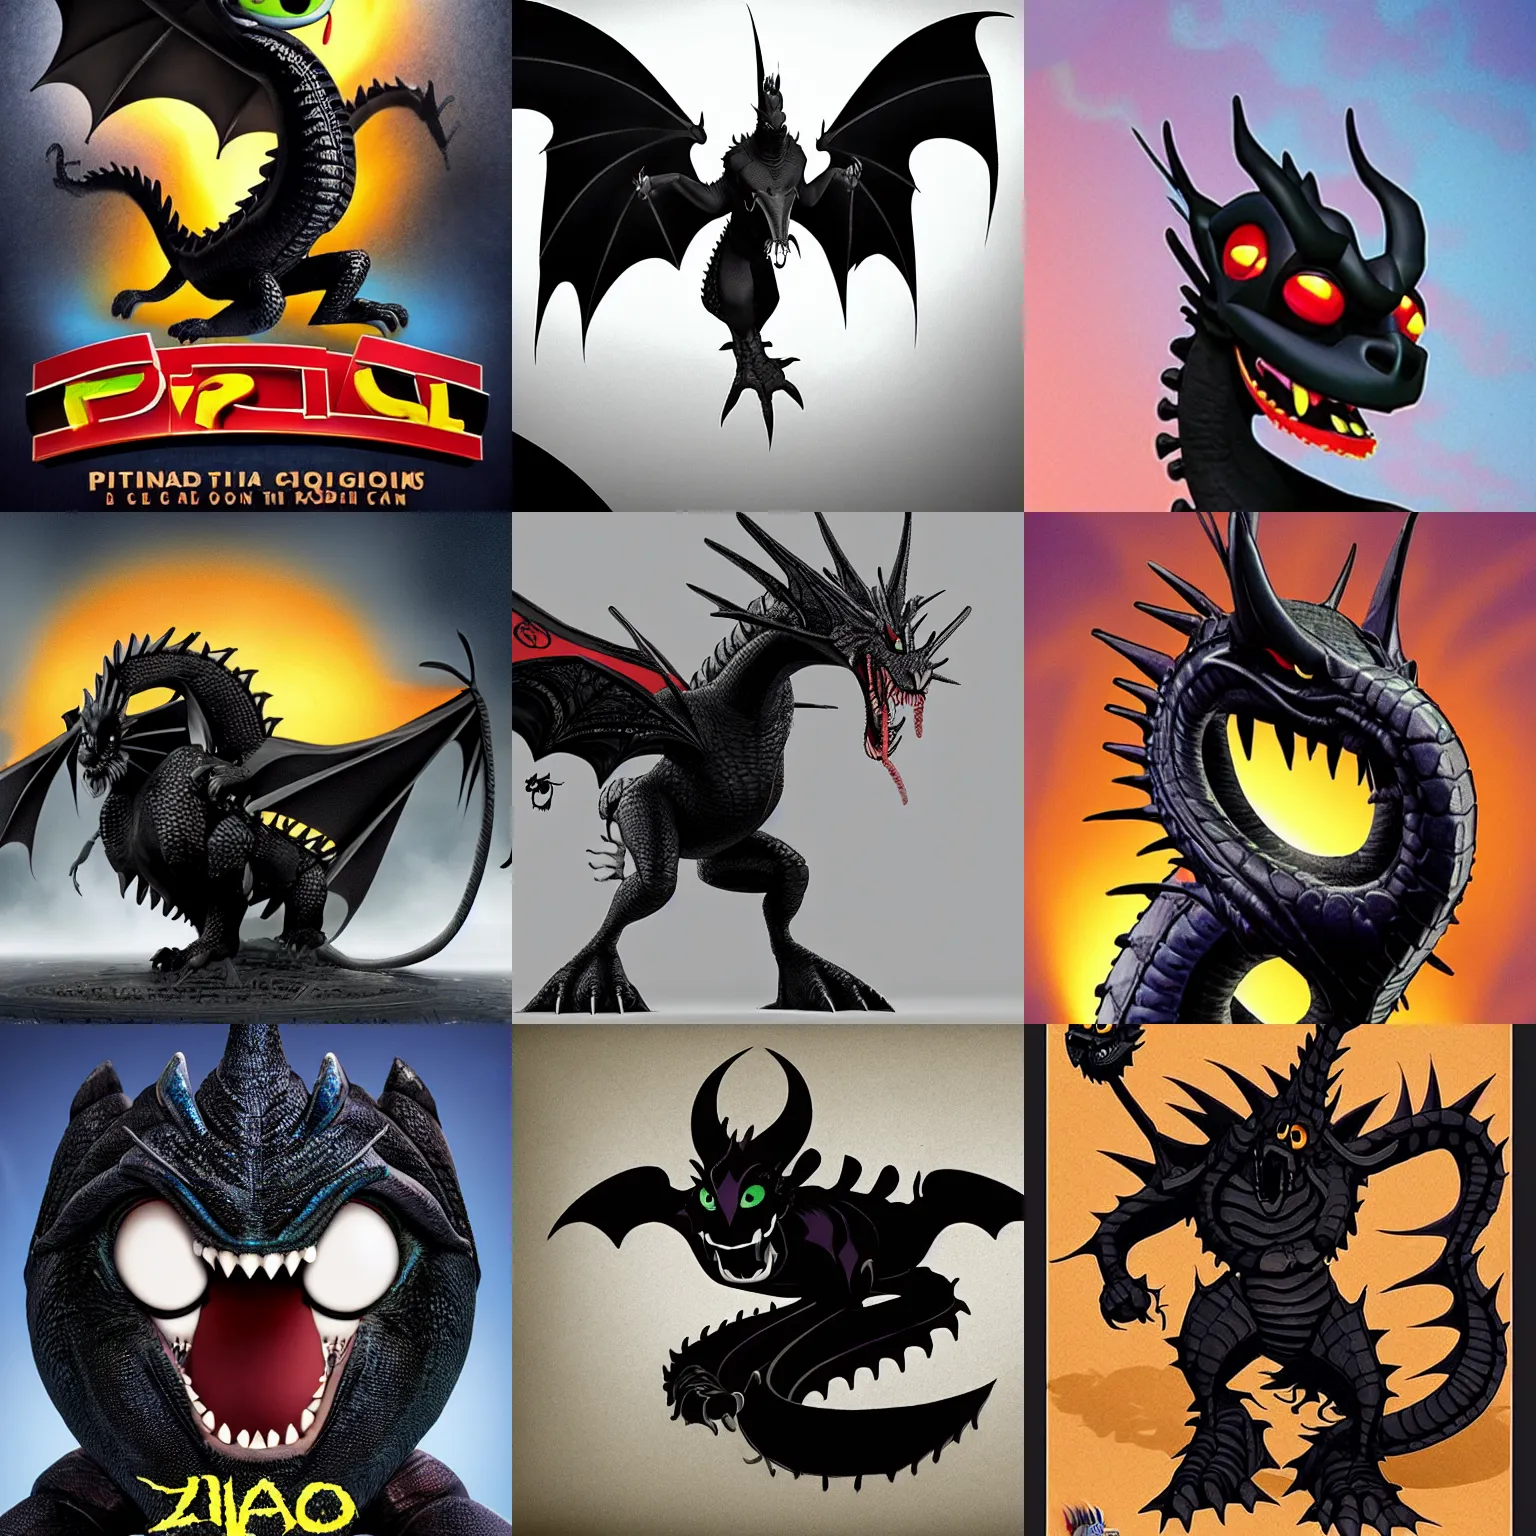 Prompt: pixar villain black dragon